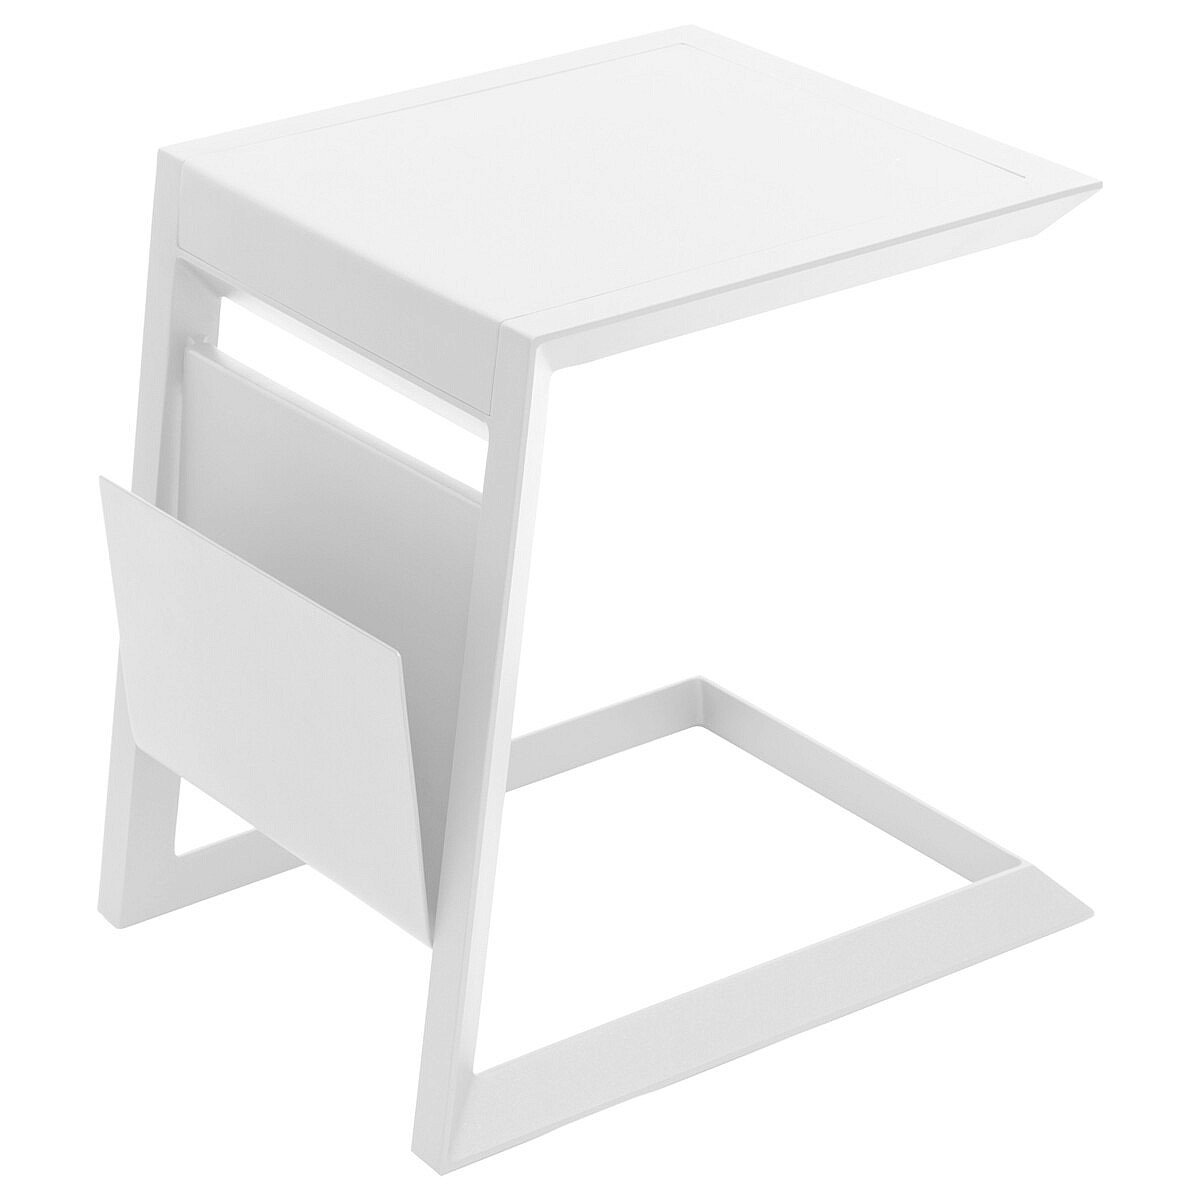 DEOKORK Kovový odkládací stolek LISABON (bílá)